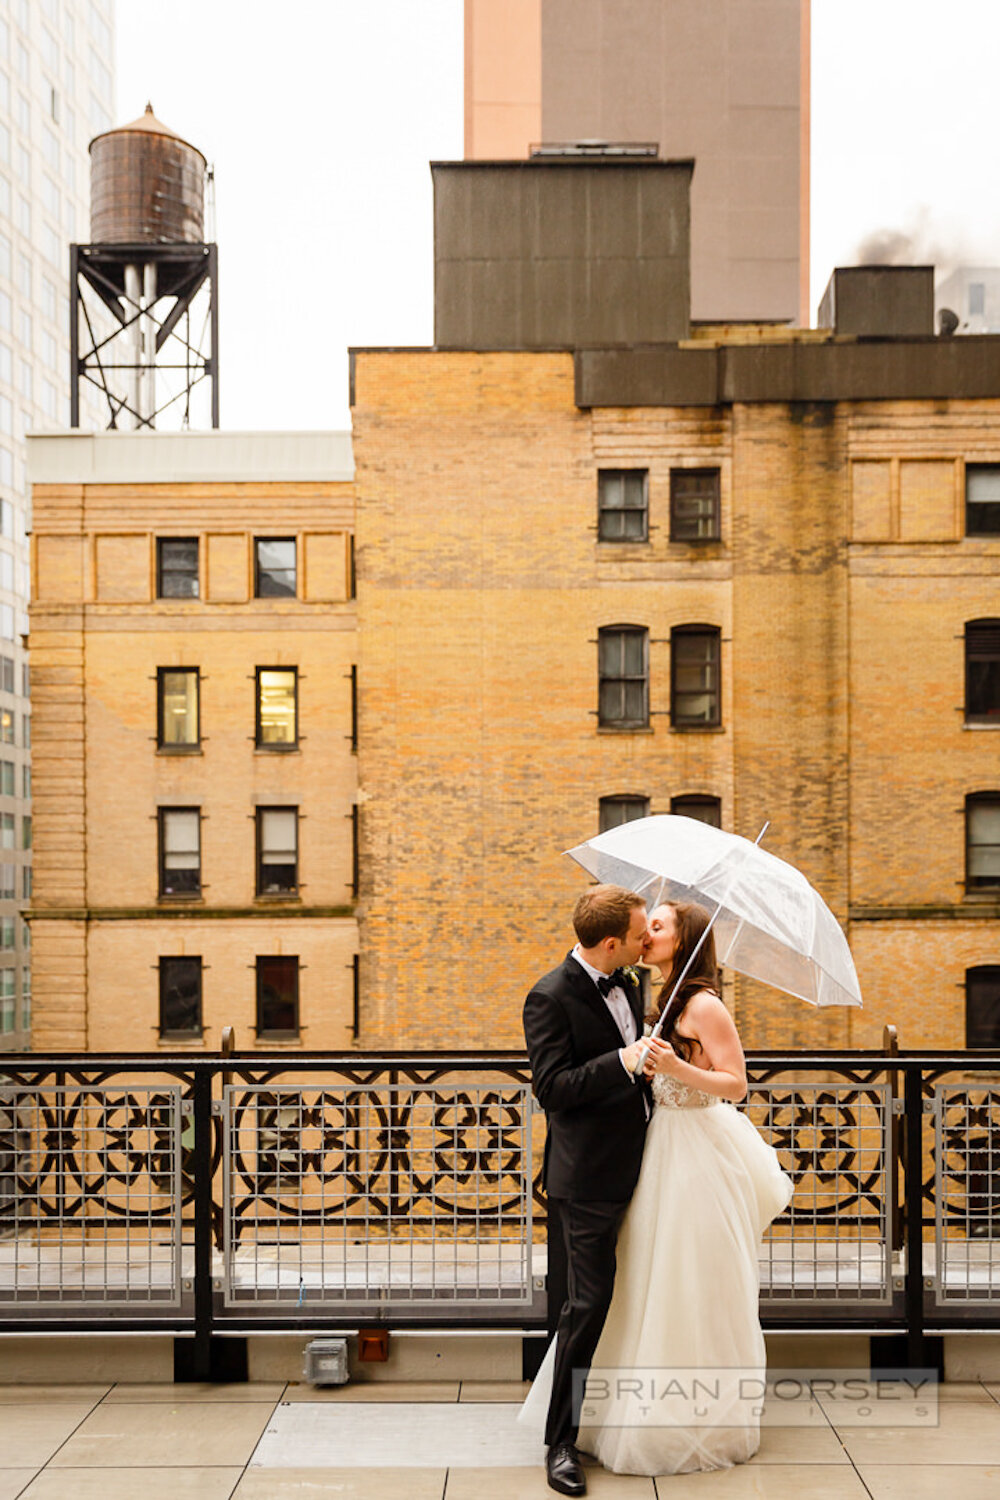 Rooftop bride and groom under umbrella